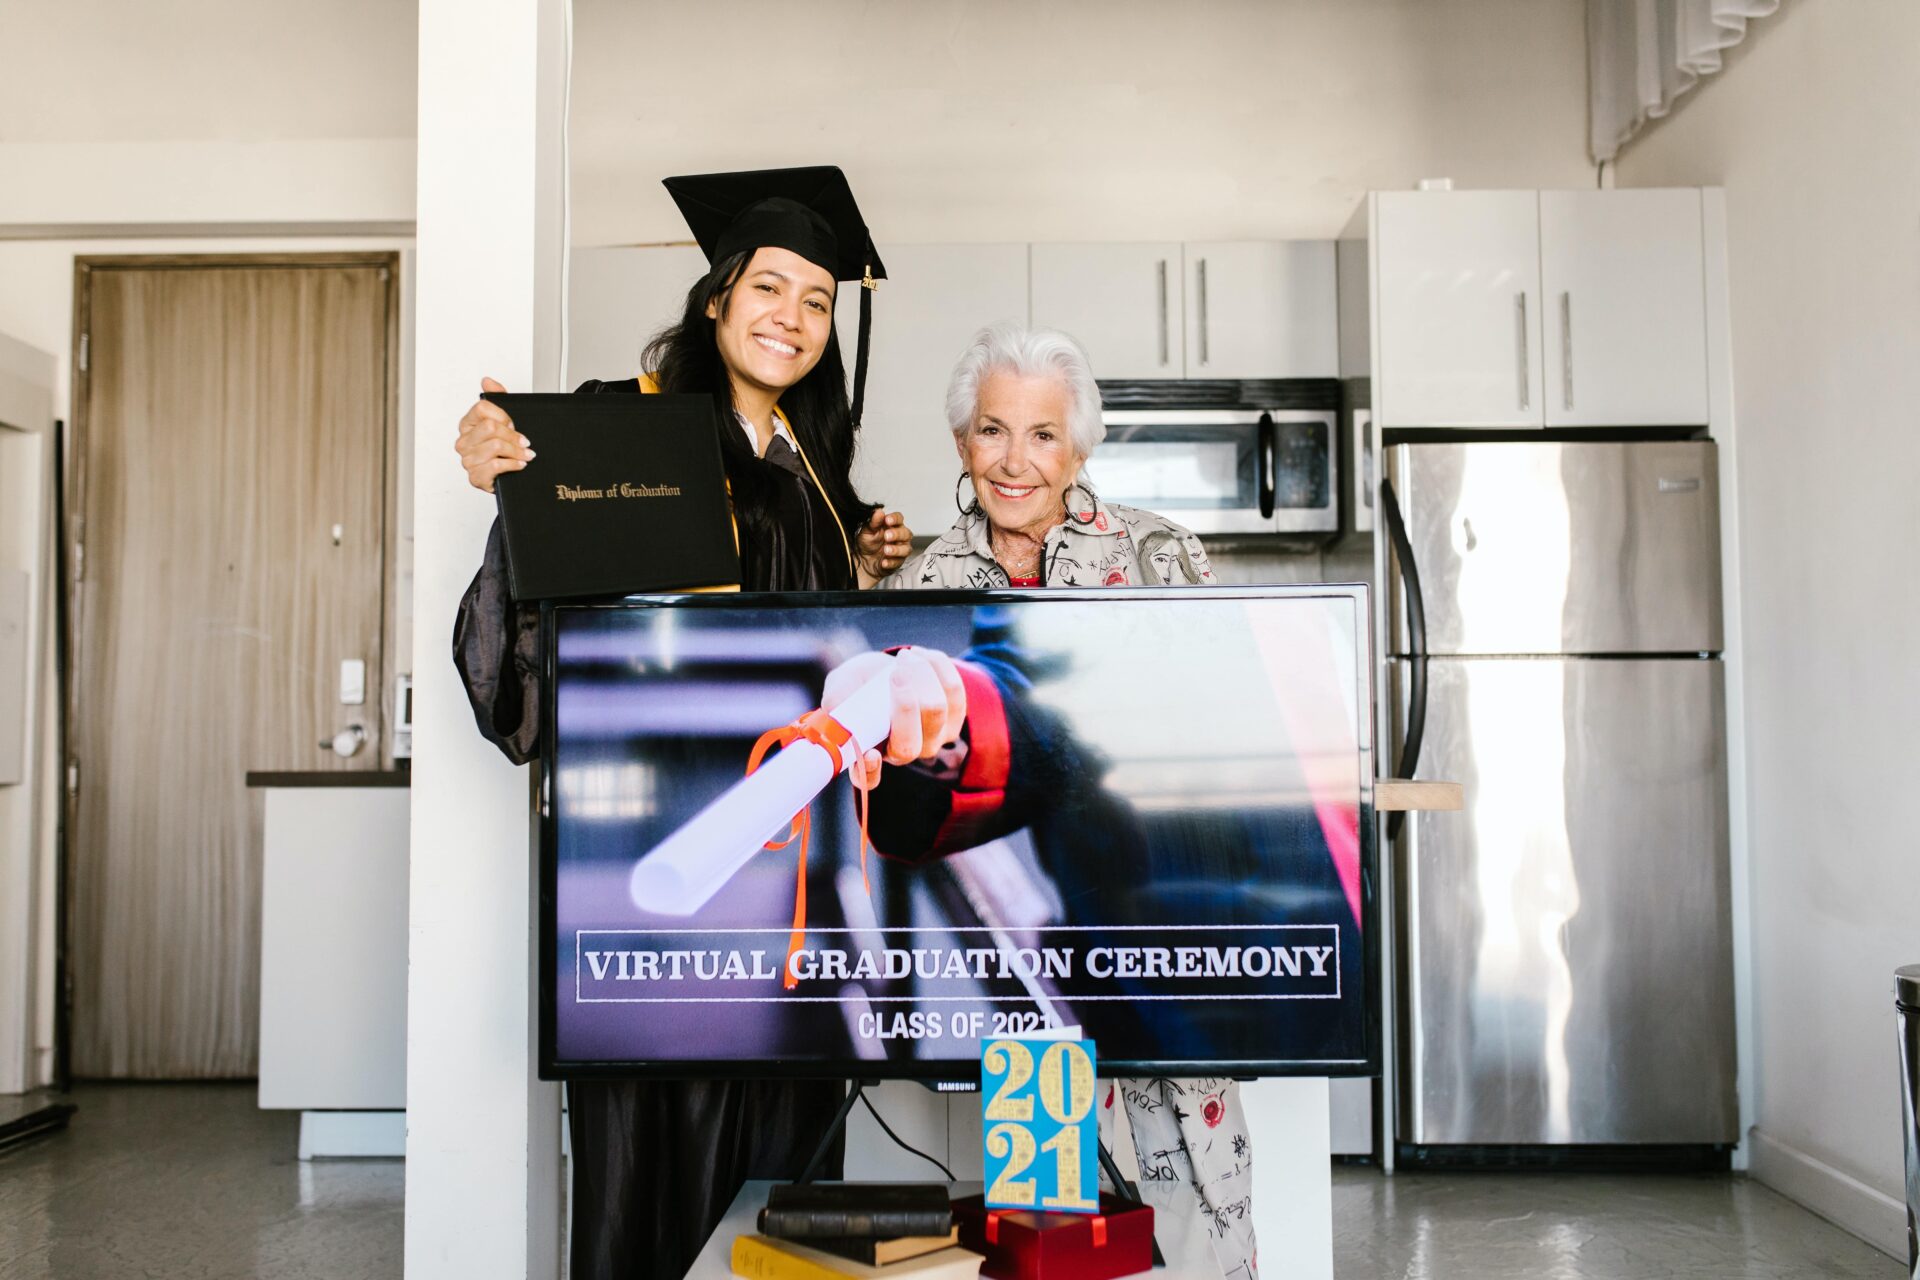 Virtual Graduation ceremony